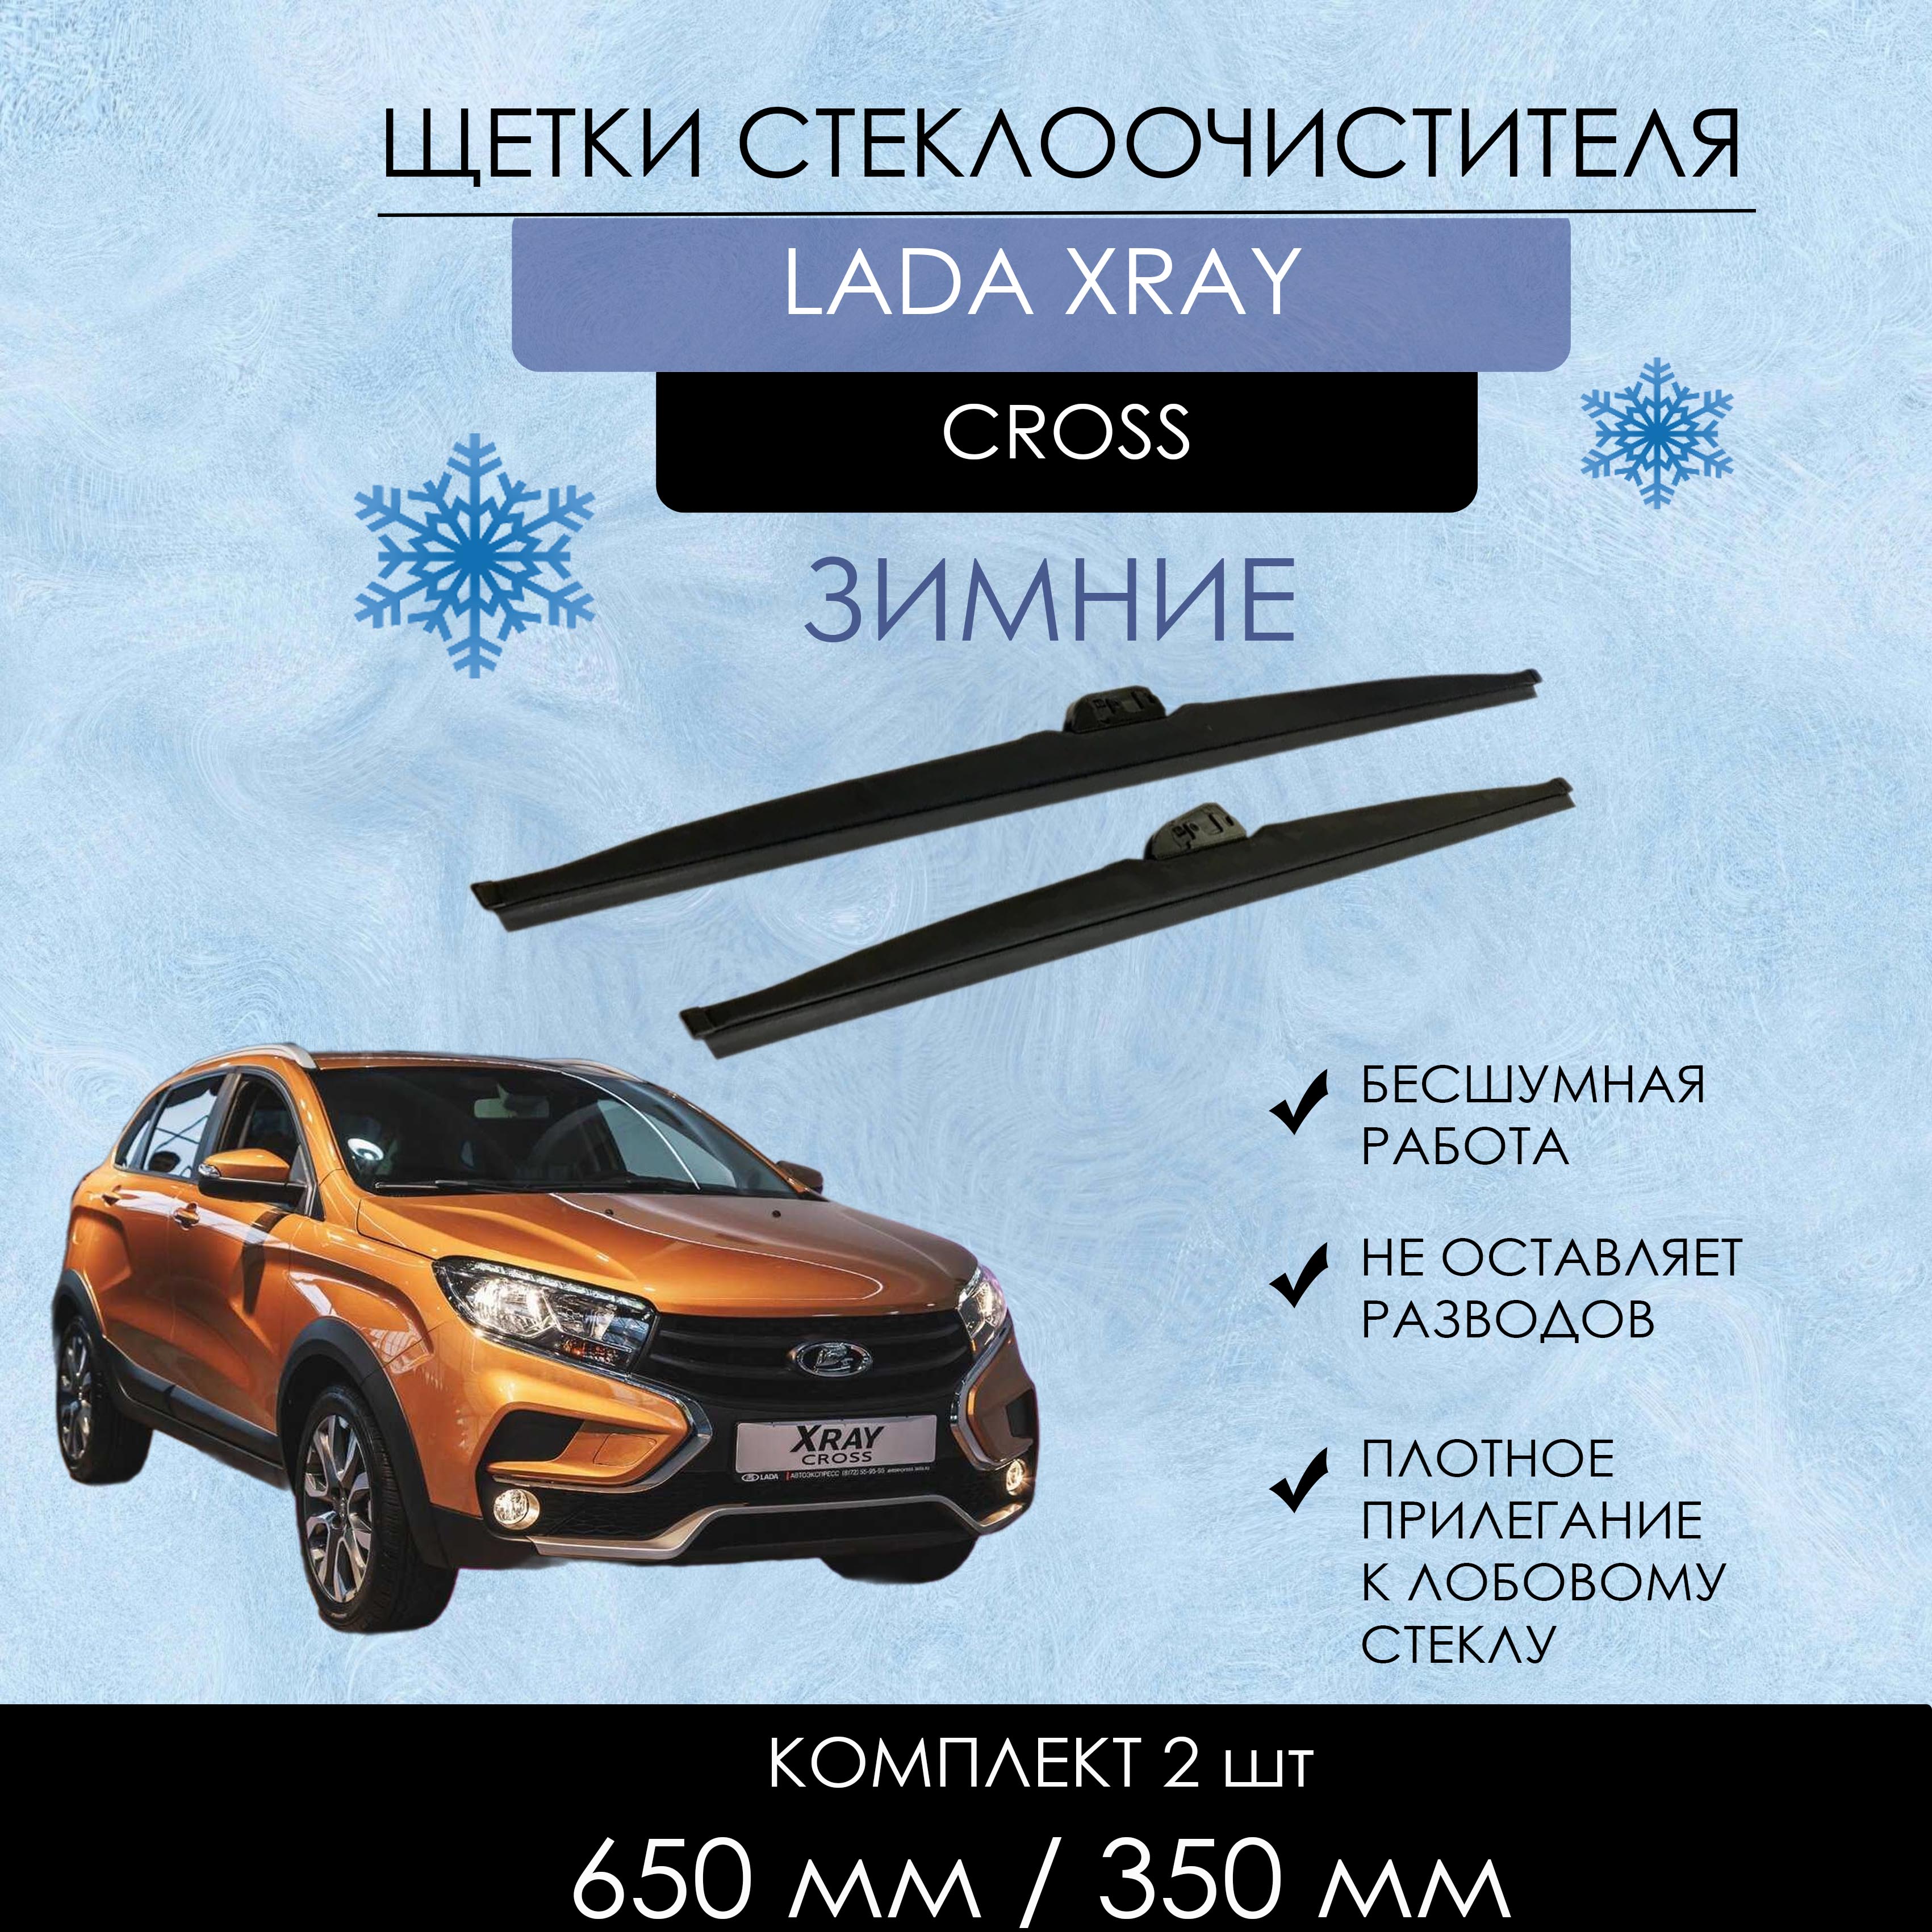 Комплект зимних щеток стеклоочистителя YOUTO,Lada XRAY, 550mm/450mm, зимние дворники Лада